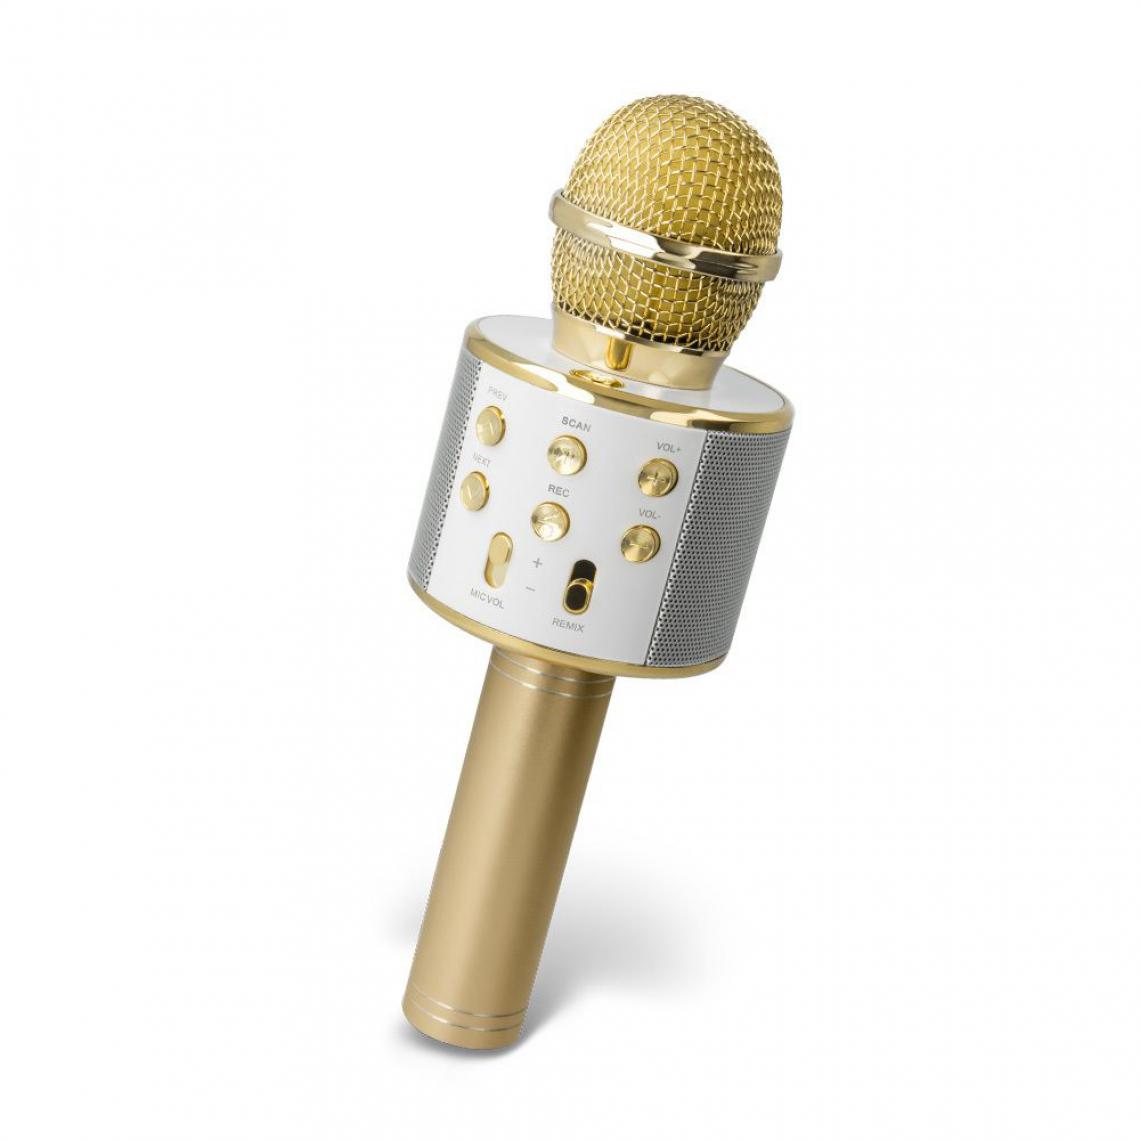 Ozzzo - Microphone Karaoke bluetooth haut parleur ozzzo Gold Or pour Huawei Y5 2019 - Autres accessoires smartphone